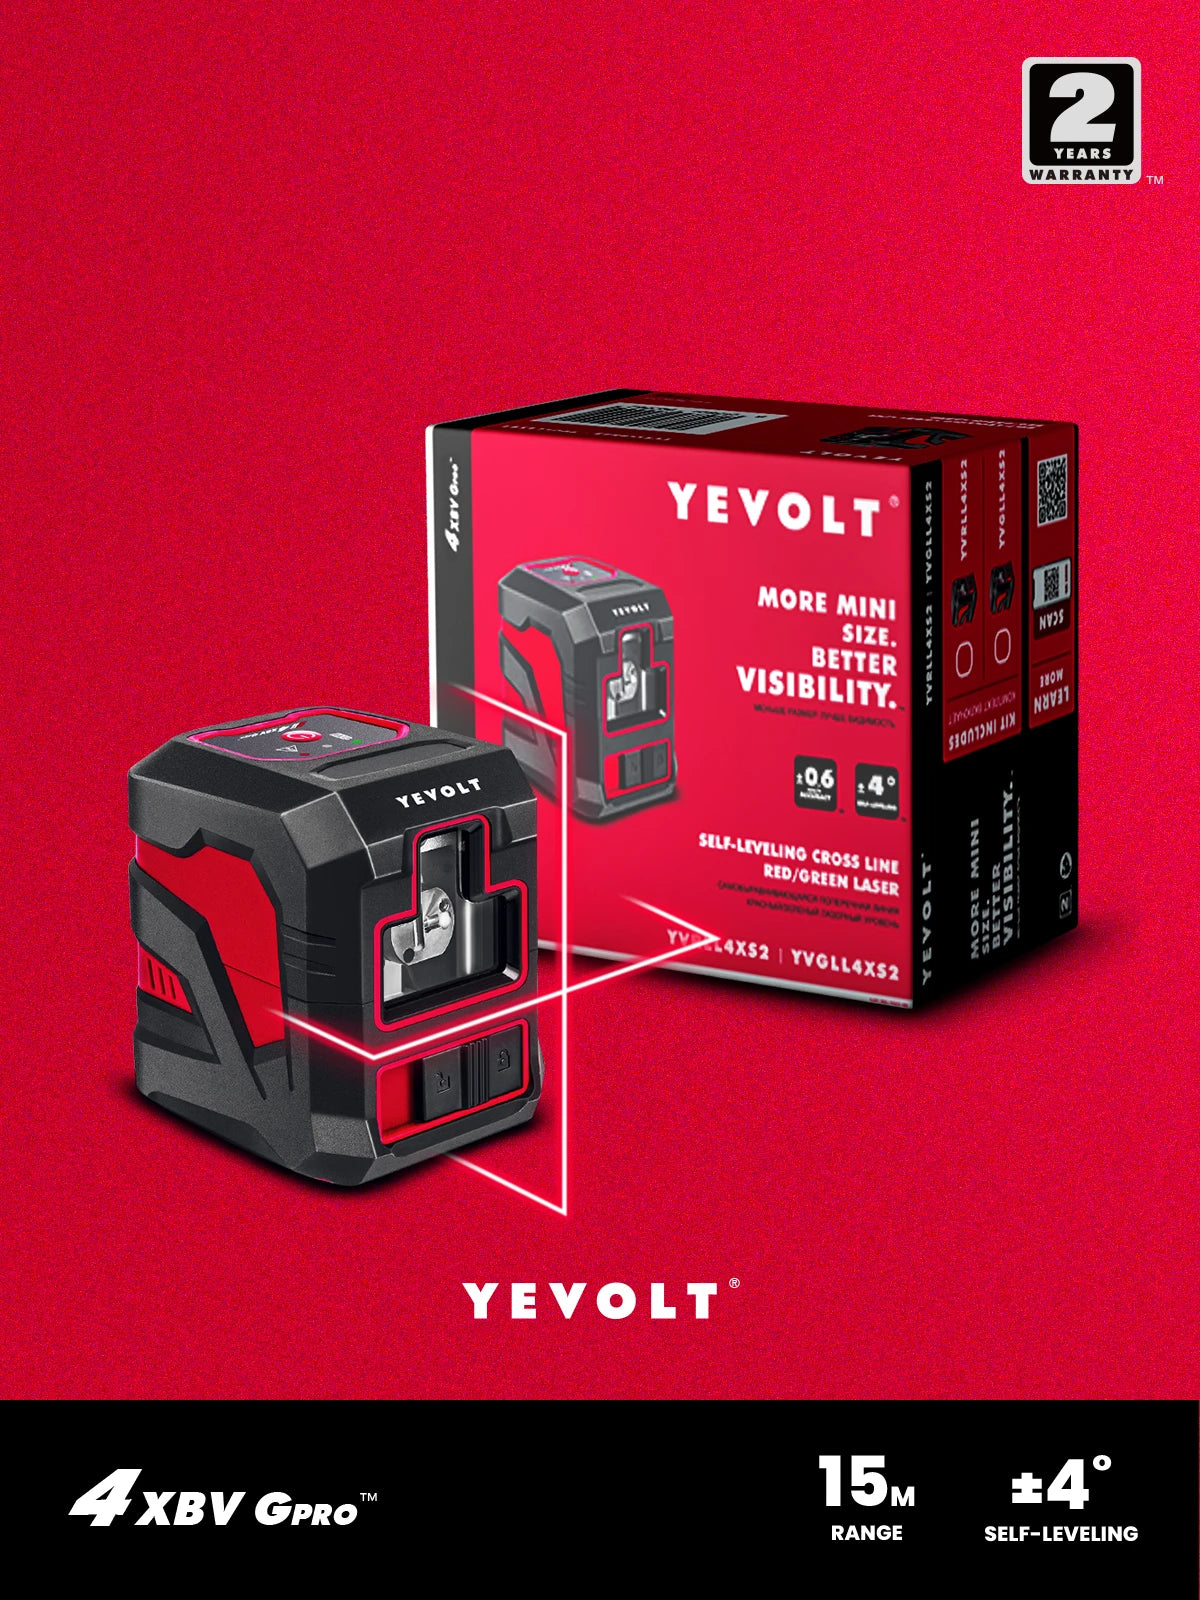 YEVOLT YVRLL4XS2 Cross Line Red Laser Level Professional High Precision Nivel Tools Mini 2-Line Measuring Machine